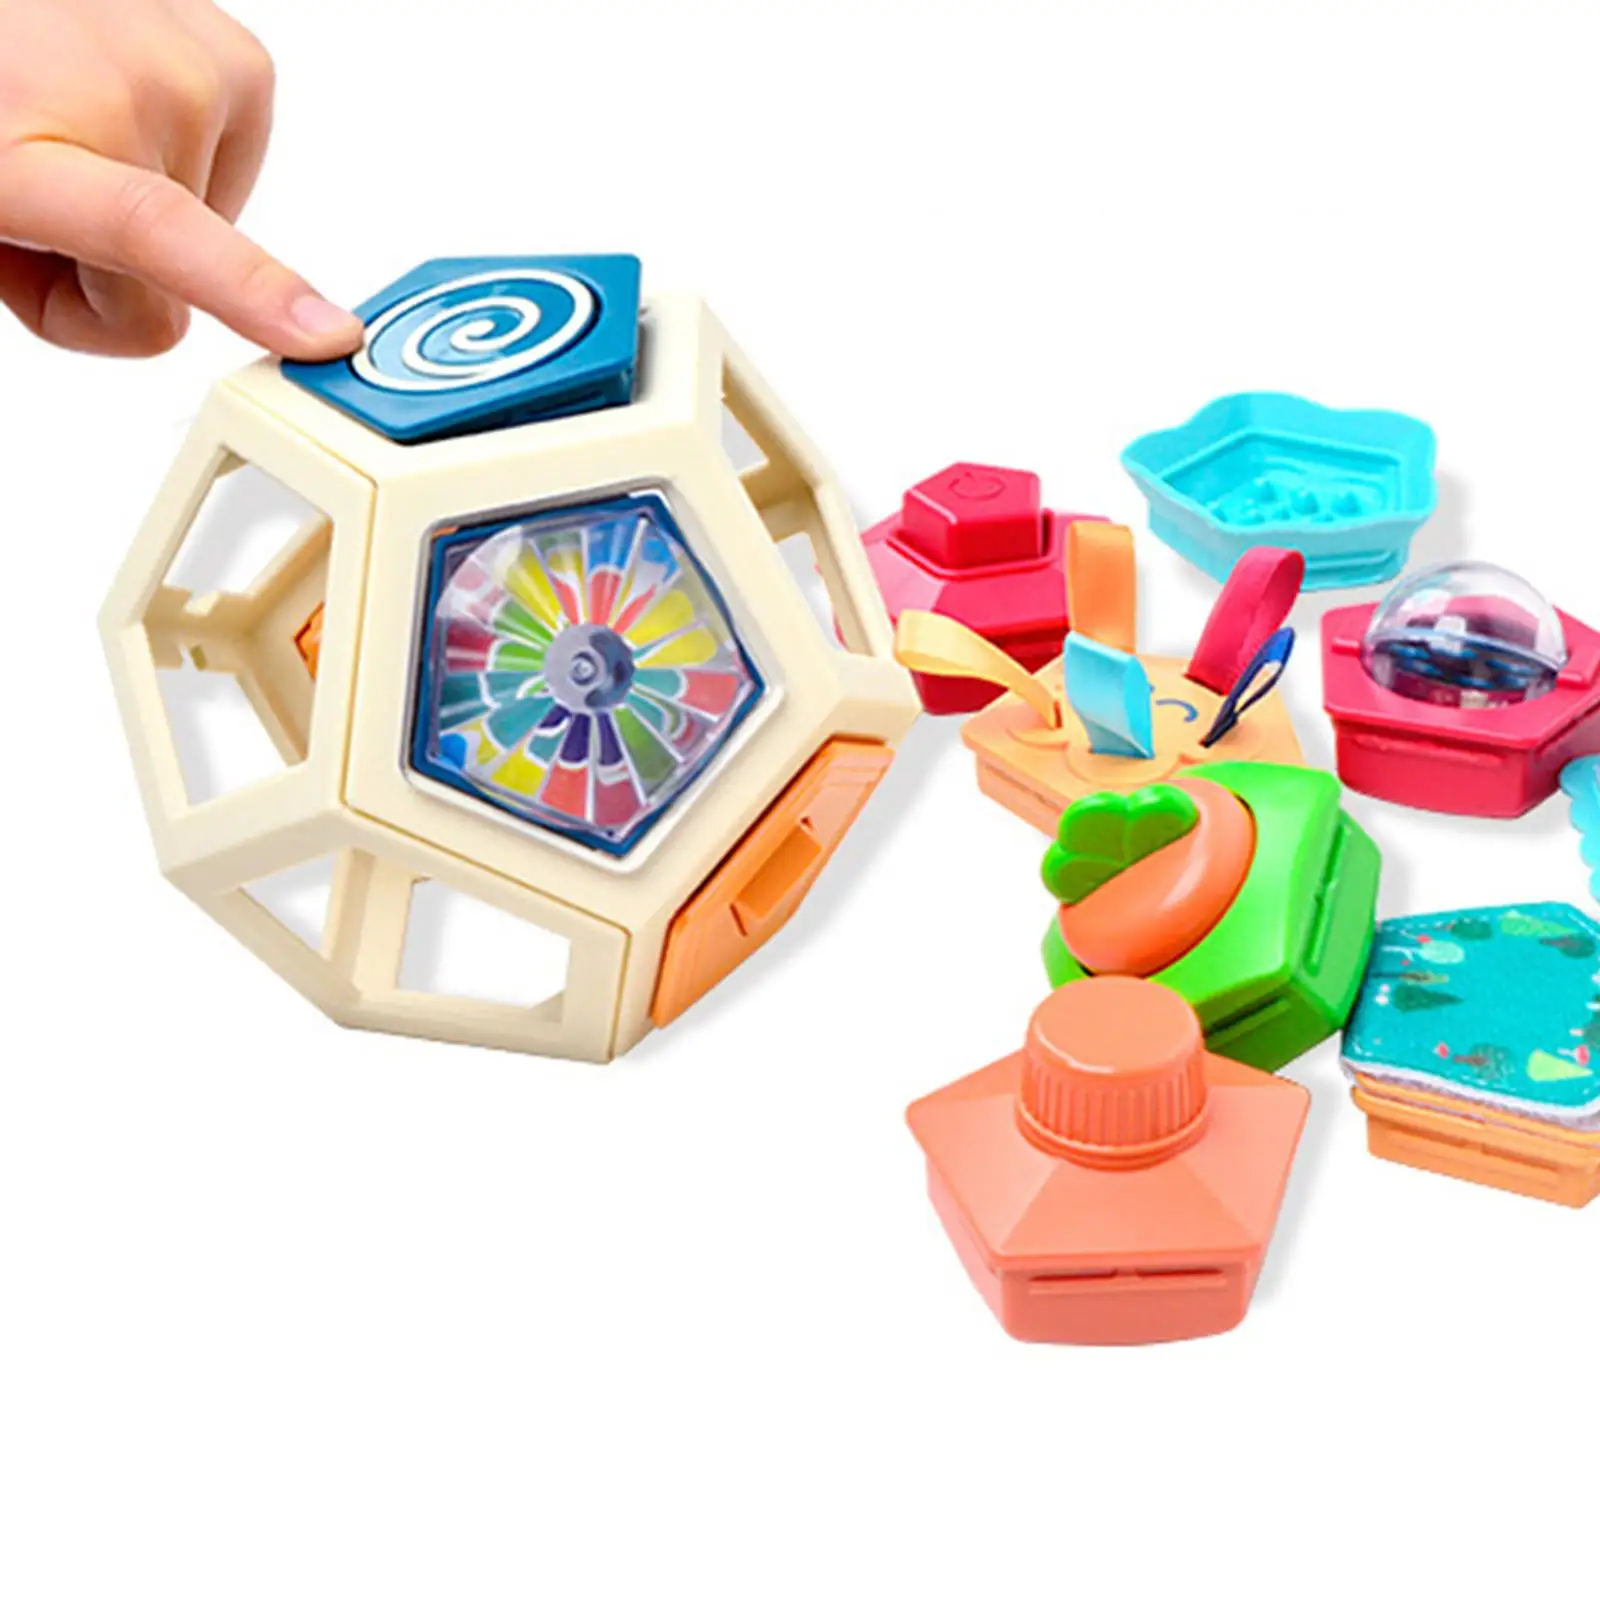 Sensory Busy Ball Montessori Early Education Training for Birthday Gift Baby